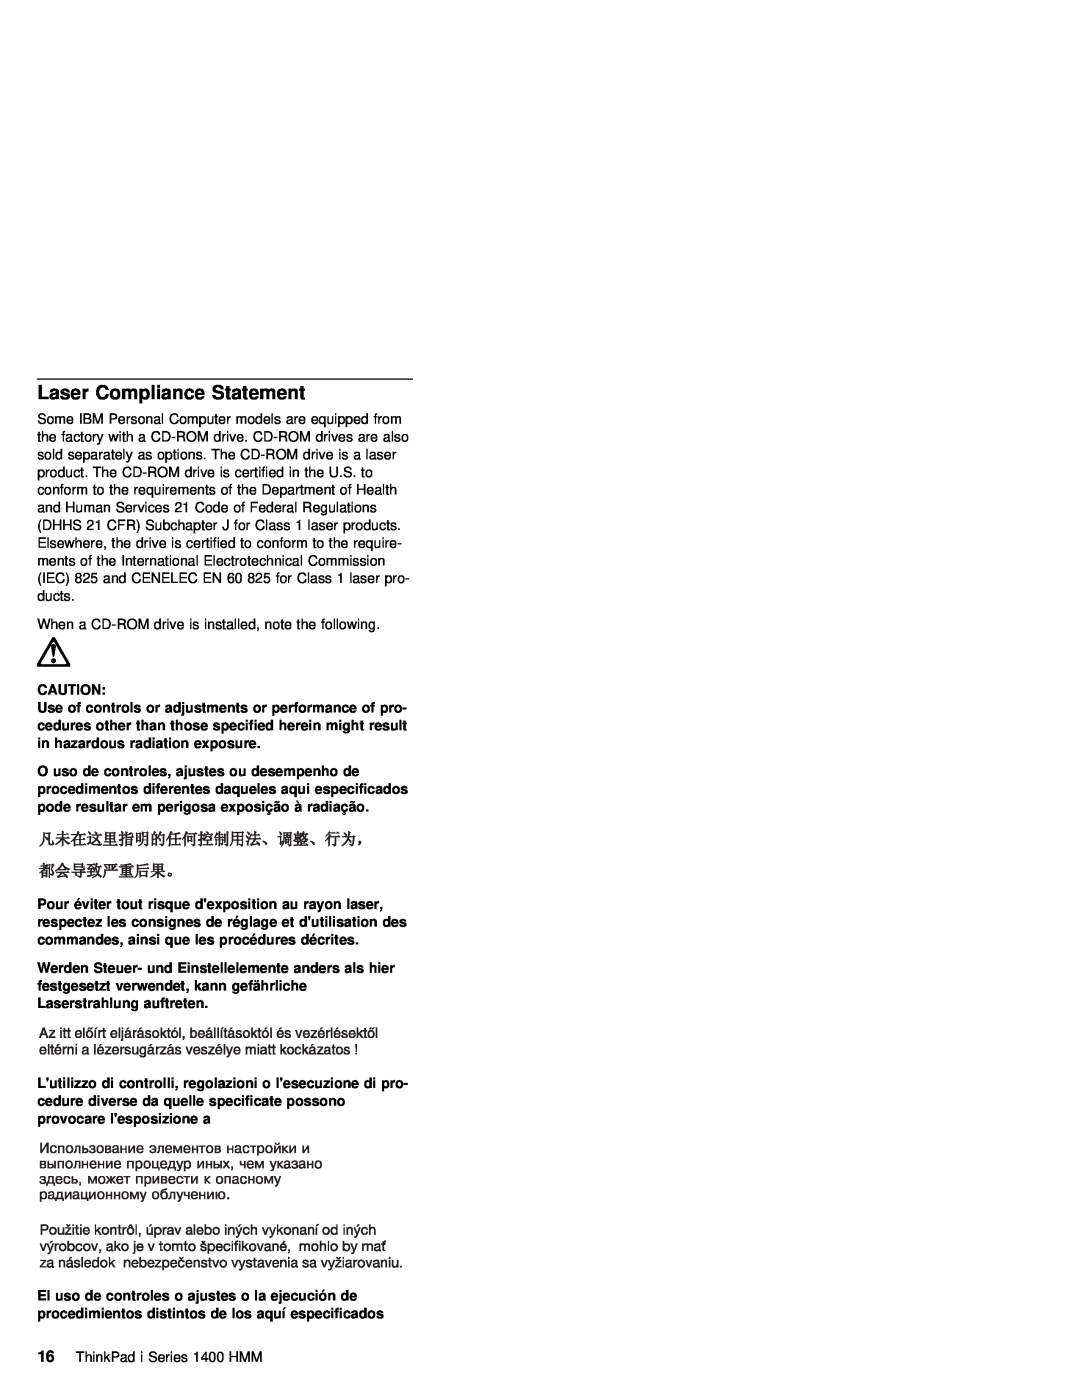 IBM 1400 (2611) manual Laser Compliance Statement 